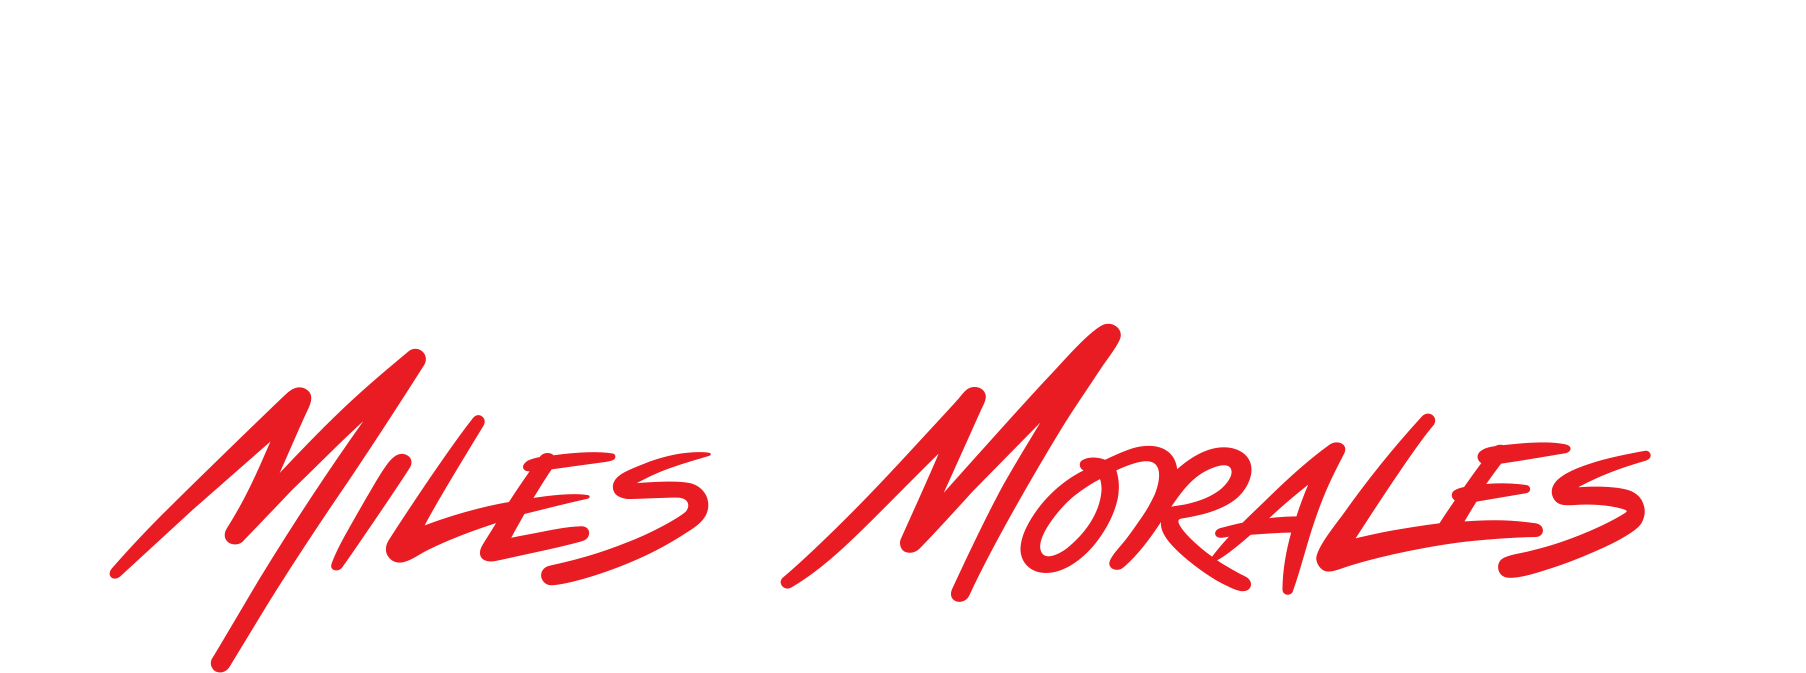 Miles Morales Spider Logo